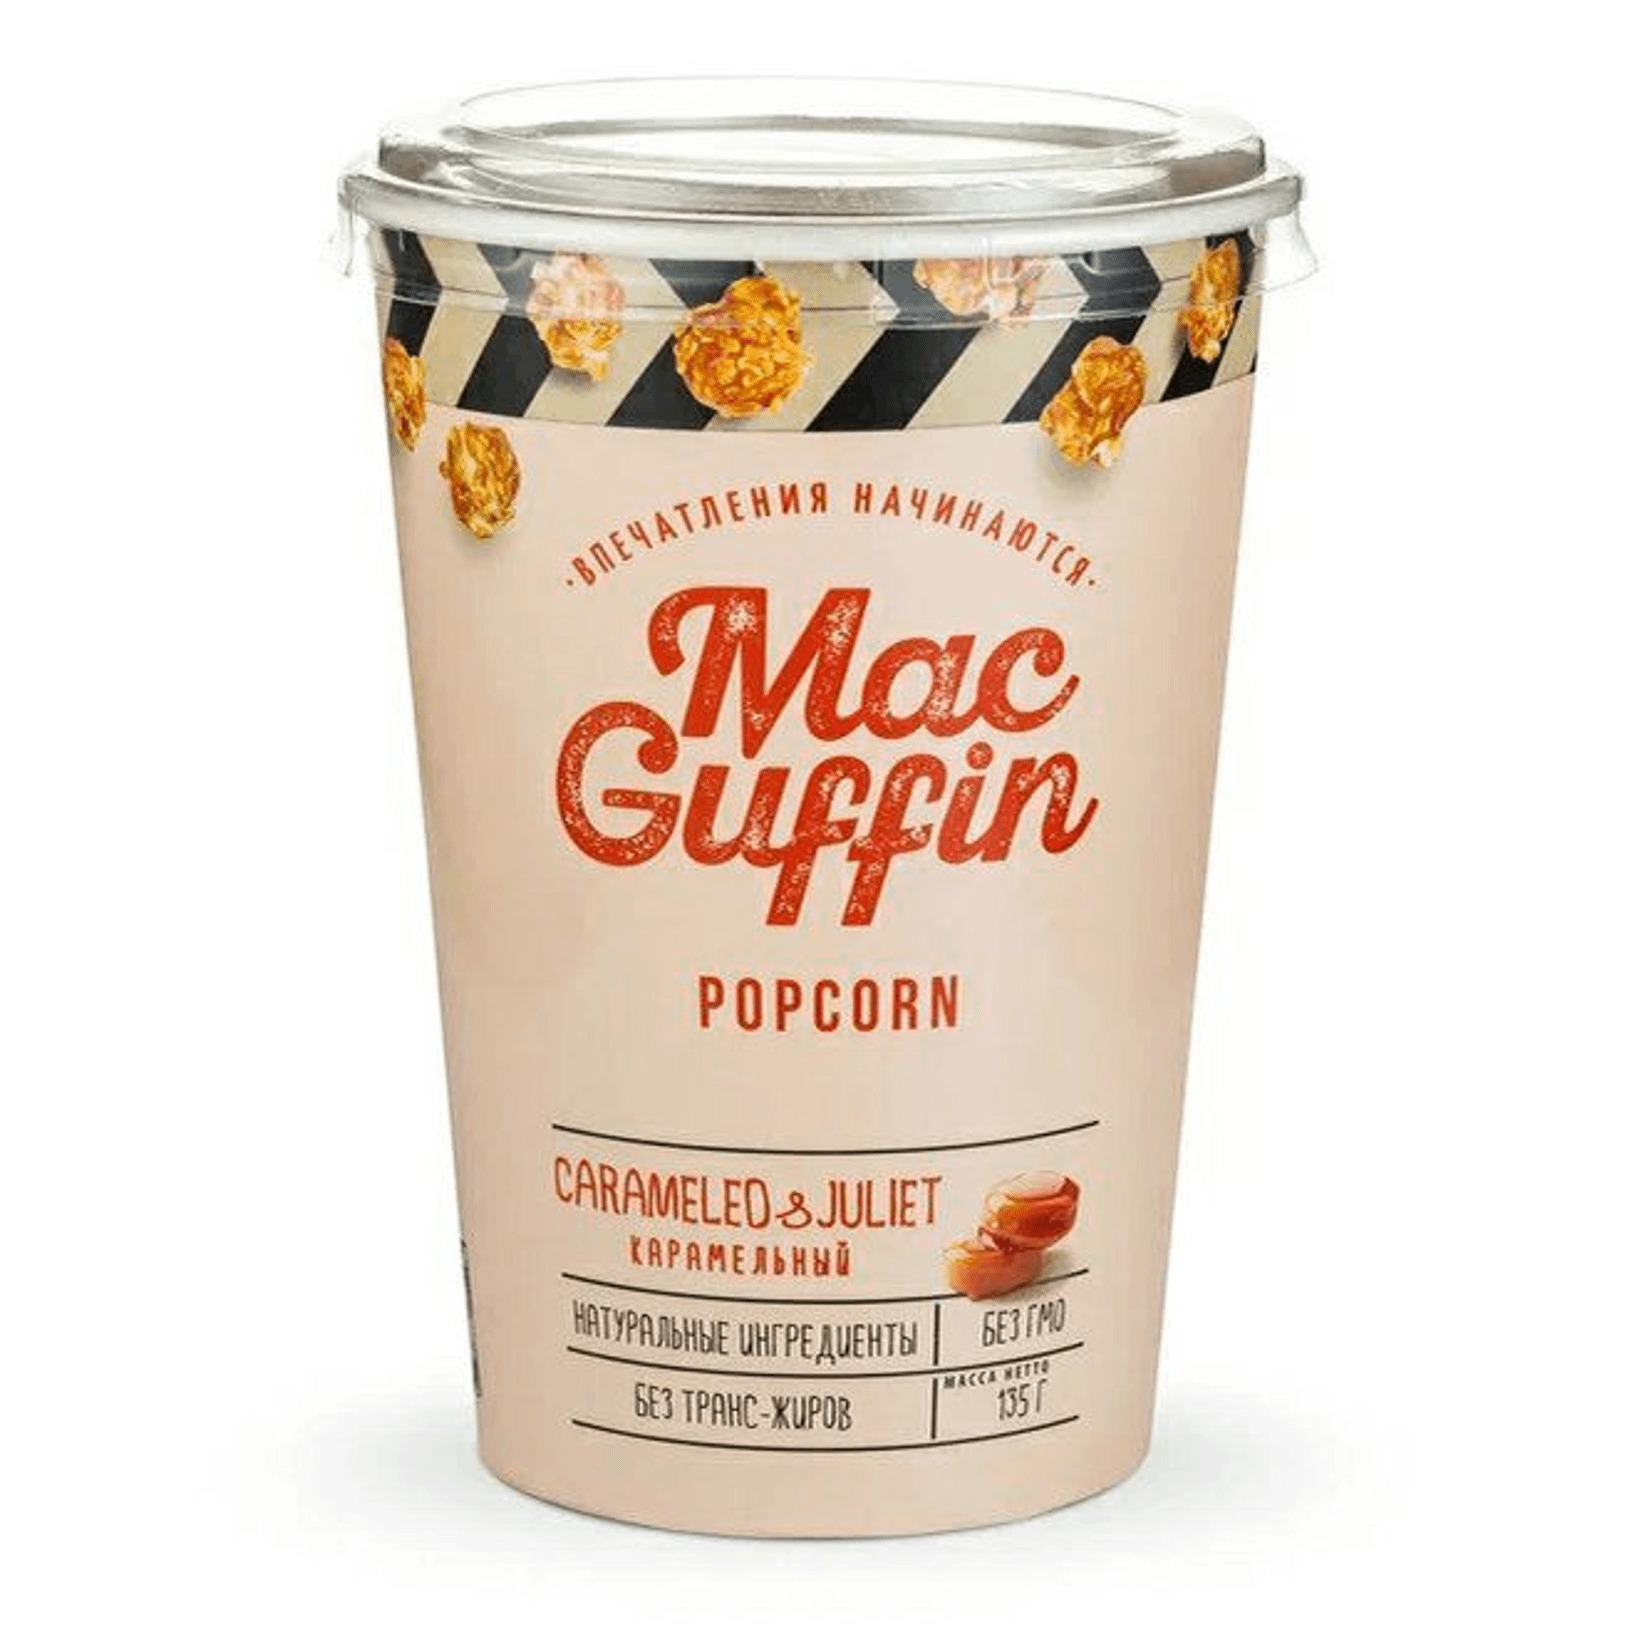 Попкорн MacGuffin карамельный, 135 г попкорн royal premium карамельный 160 г